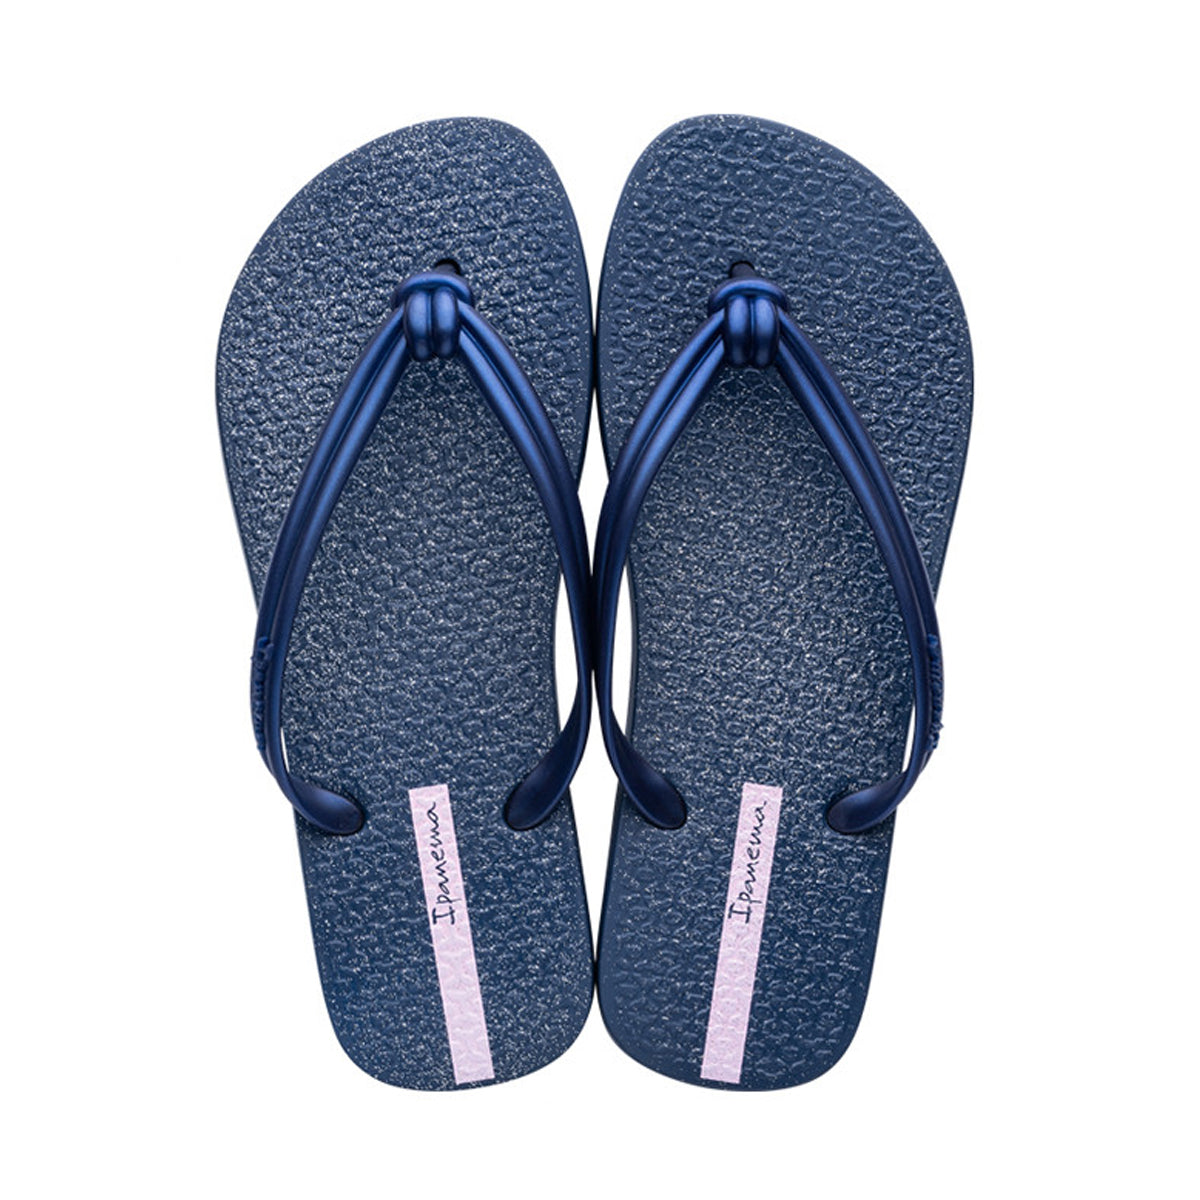 Ipanema Flip-Flops For Women, Dark Blue & Navy